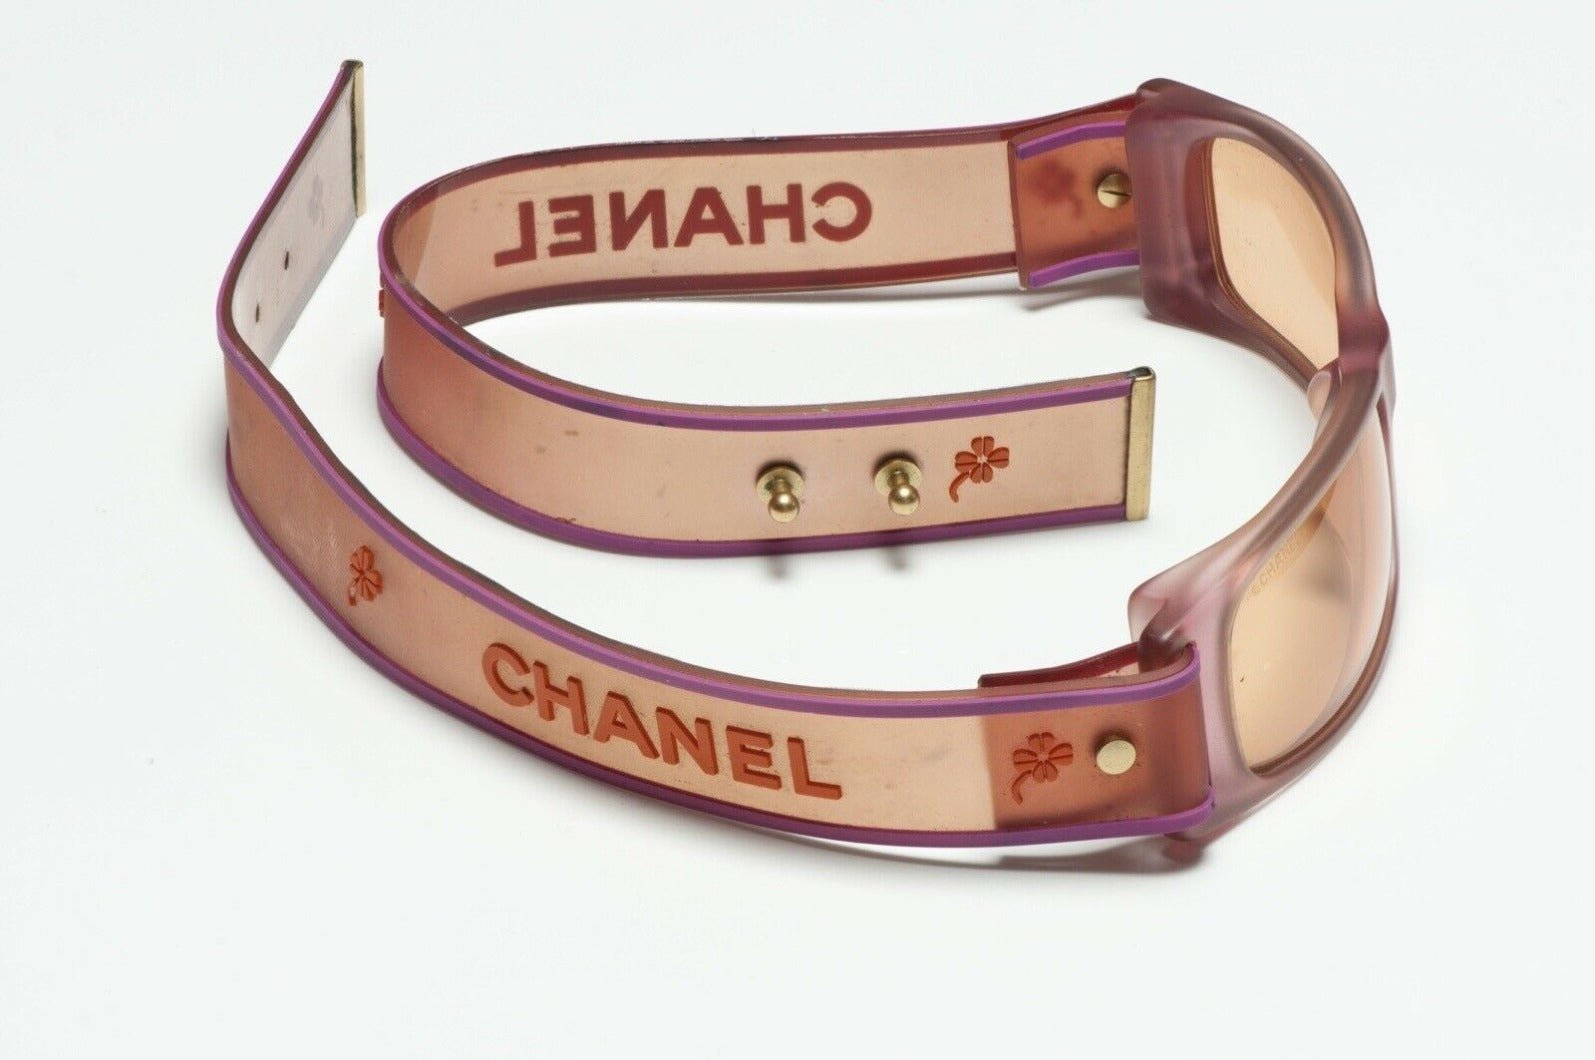 CHANEL Paris 2000’s Pink Wrap Around Women’s Goggles Sunglasses